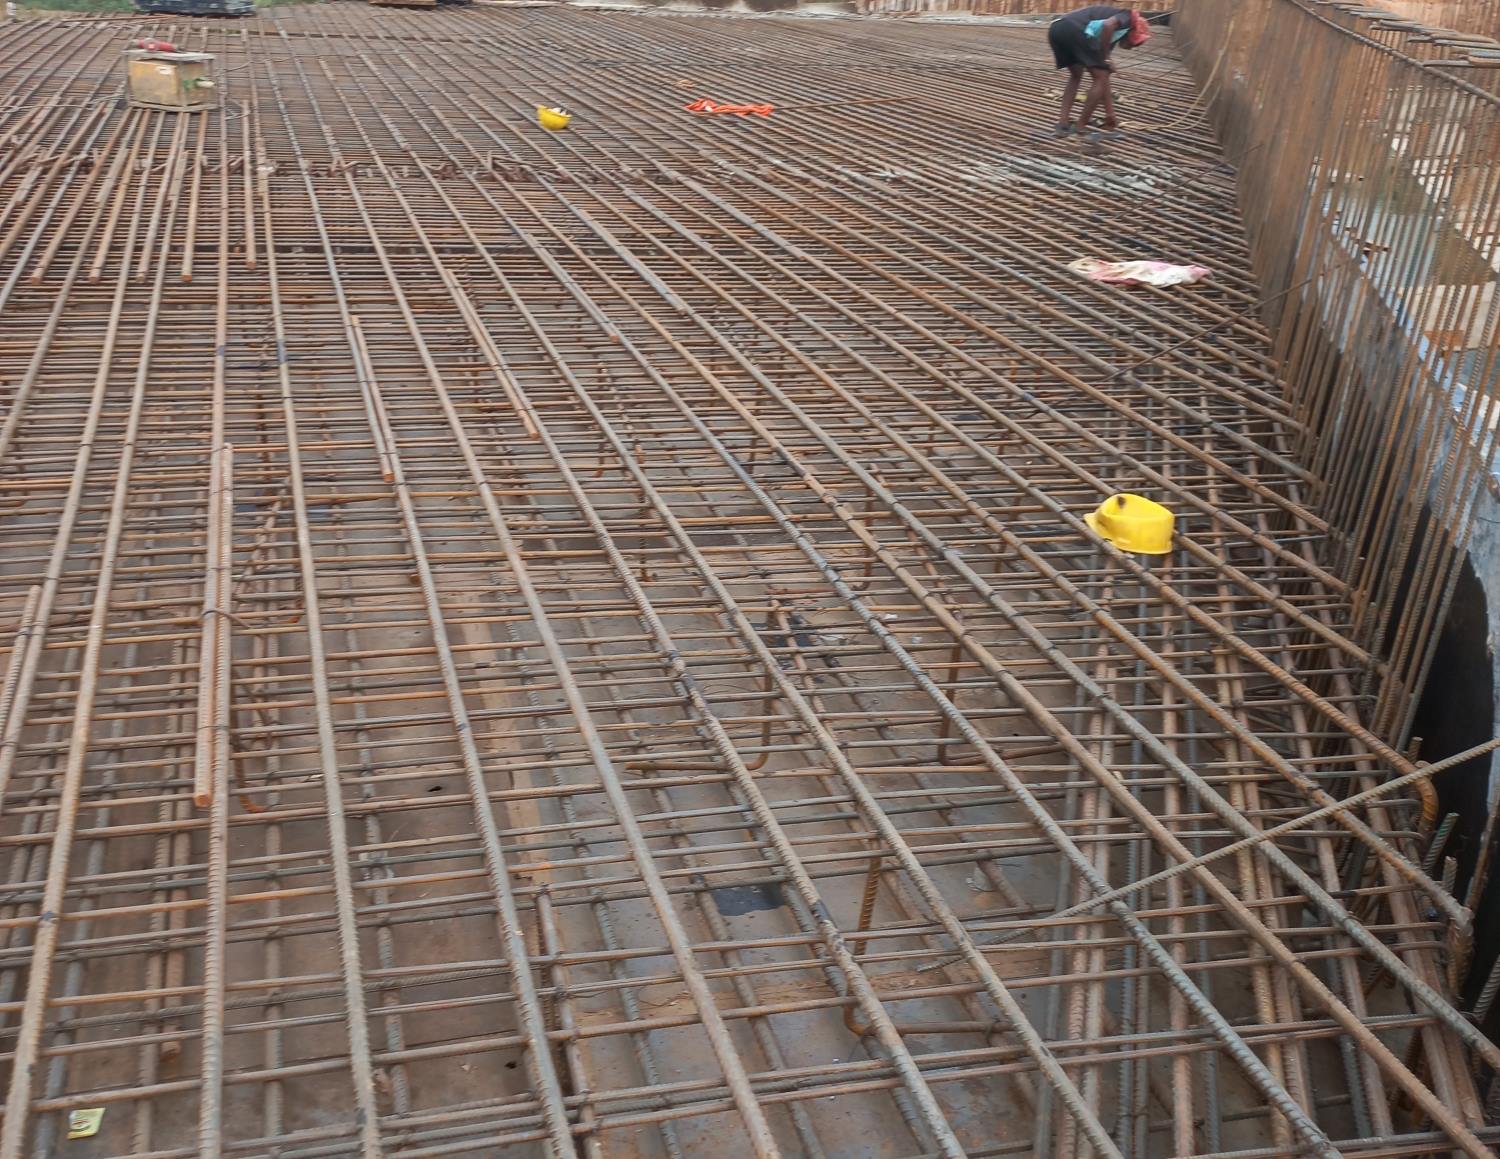 slab top bar steel preparation by construction worker